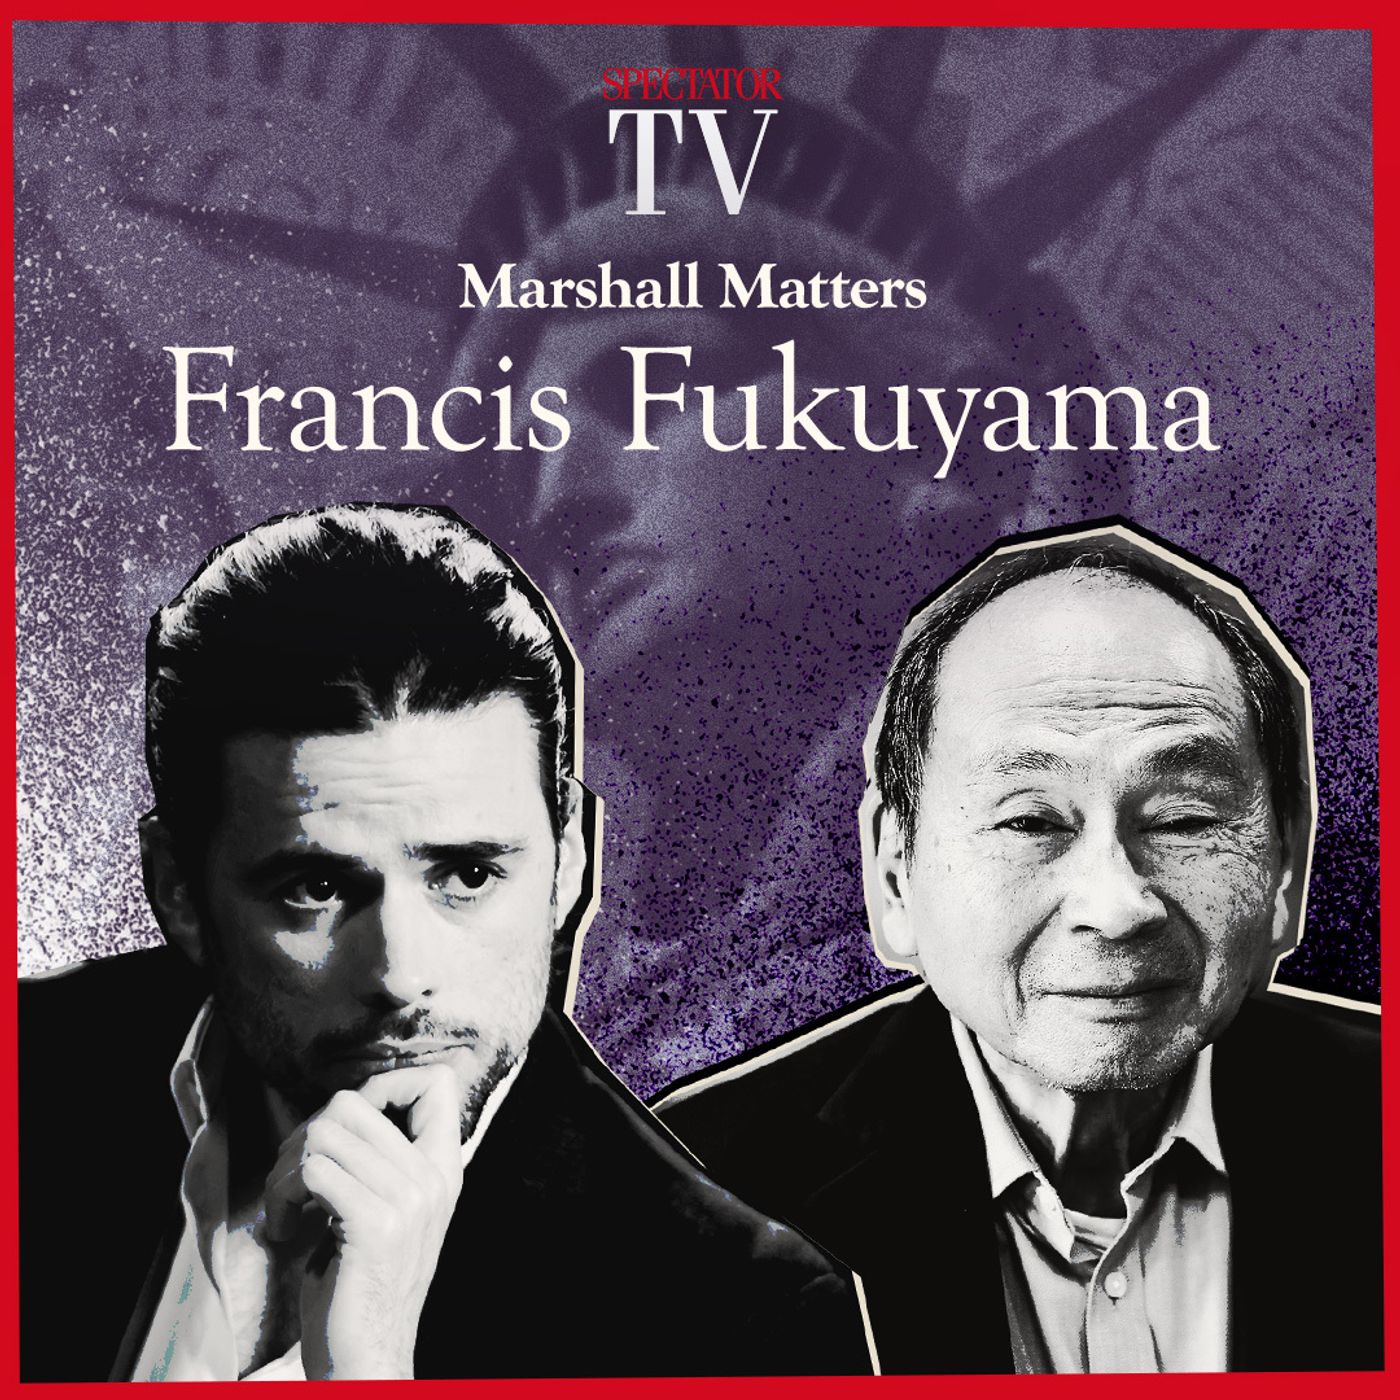 Francis Fukuyama: Can liberalism and nationalism coexist?